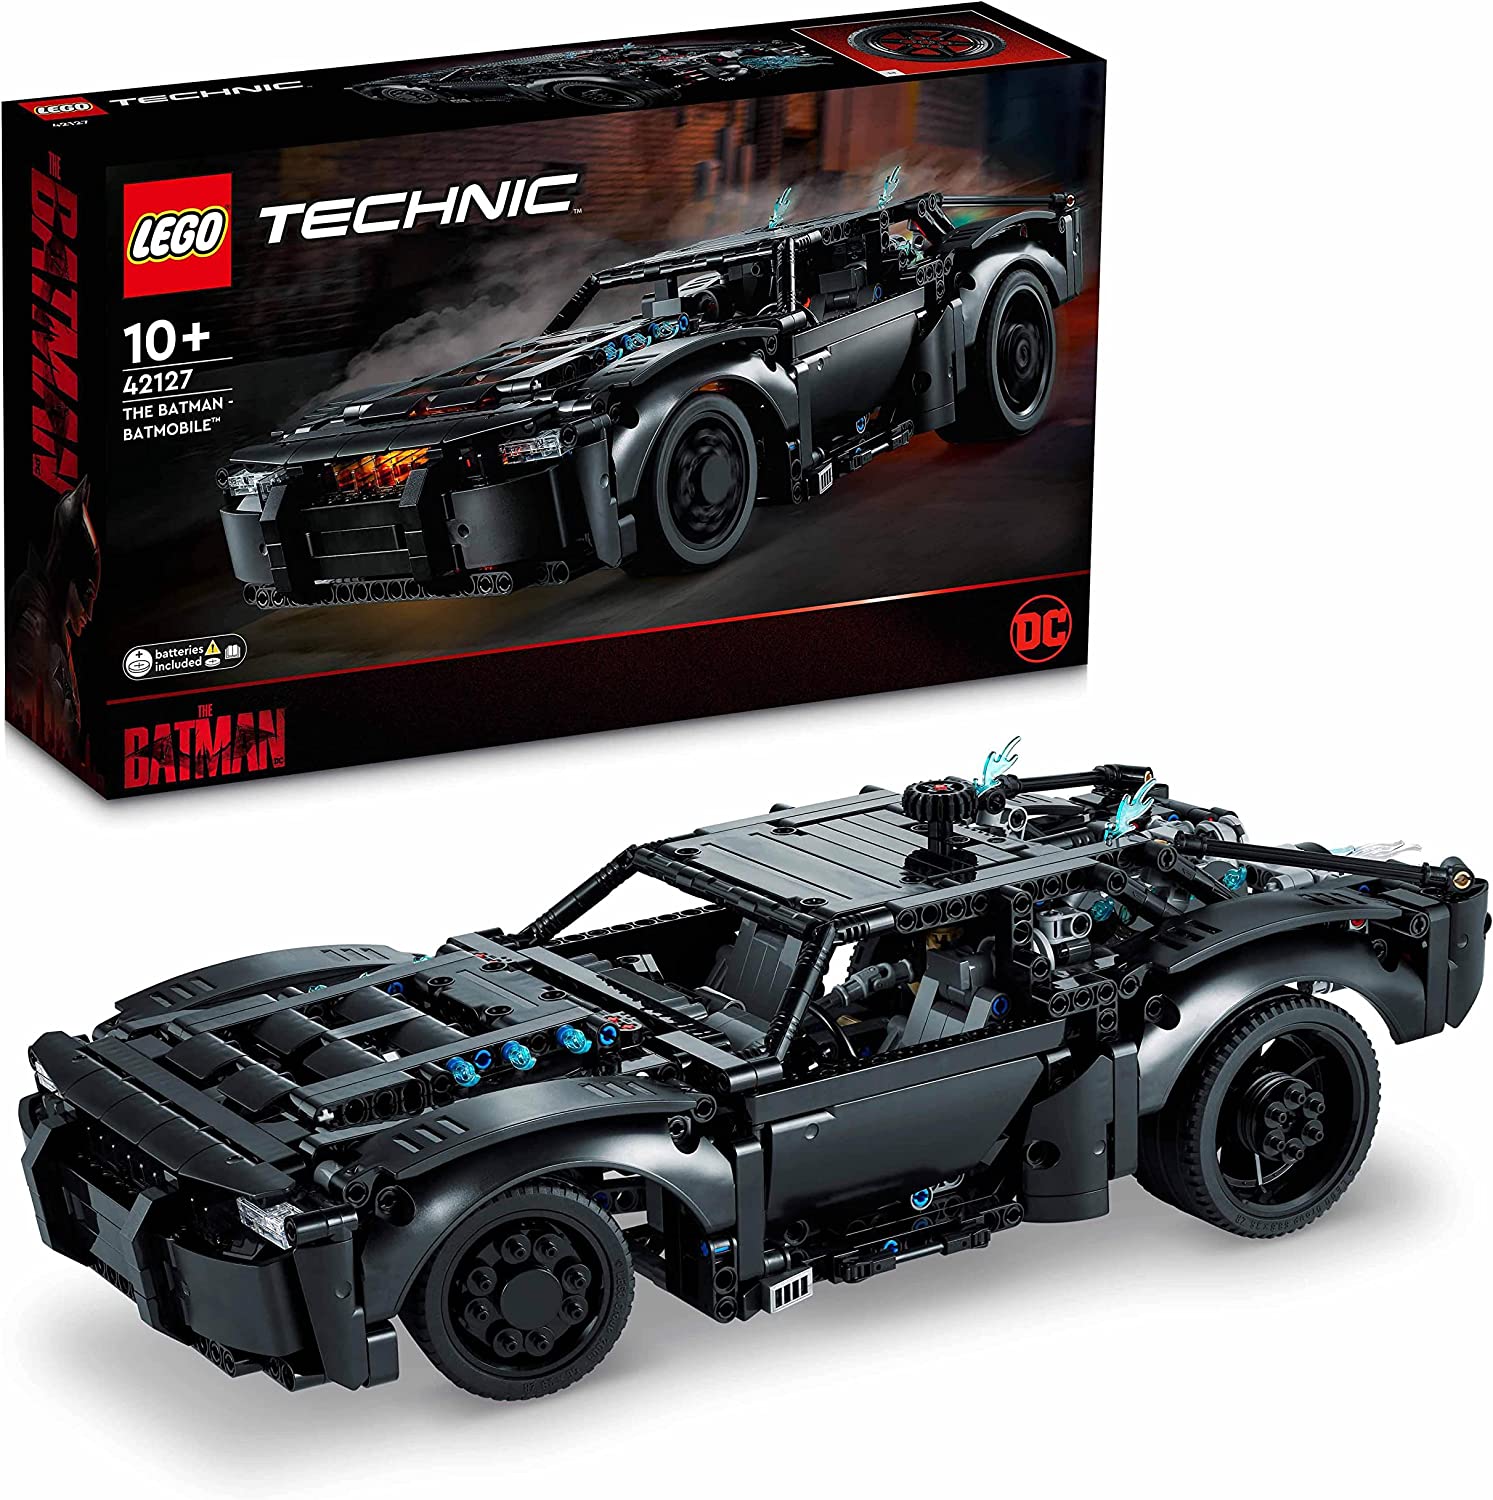 LEGO 42127 Technic BATMANS BATMOBIL Toy Car, Model Car Kit from the Batman Movie of 2022 with Luminous Stones, Christmas Gift for Children